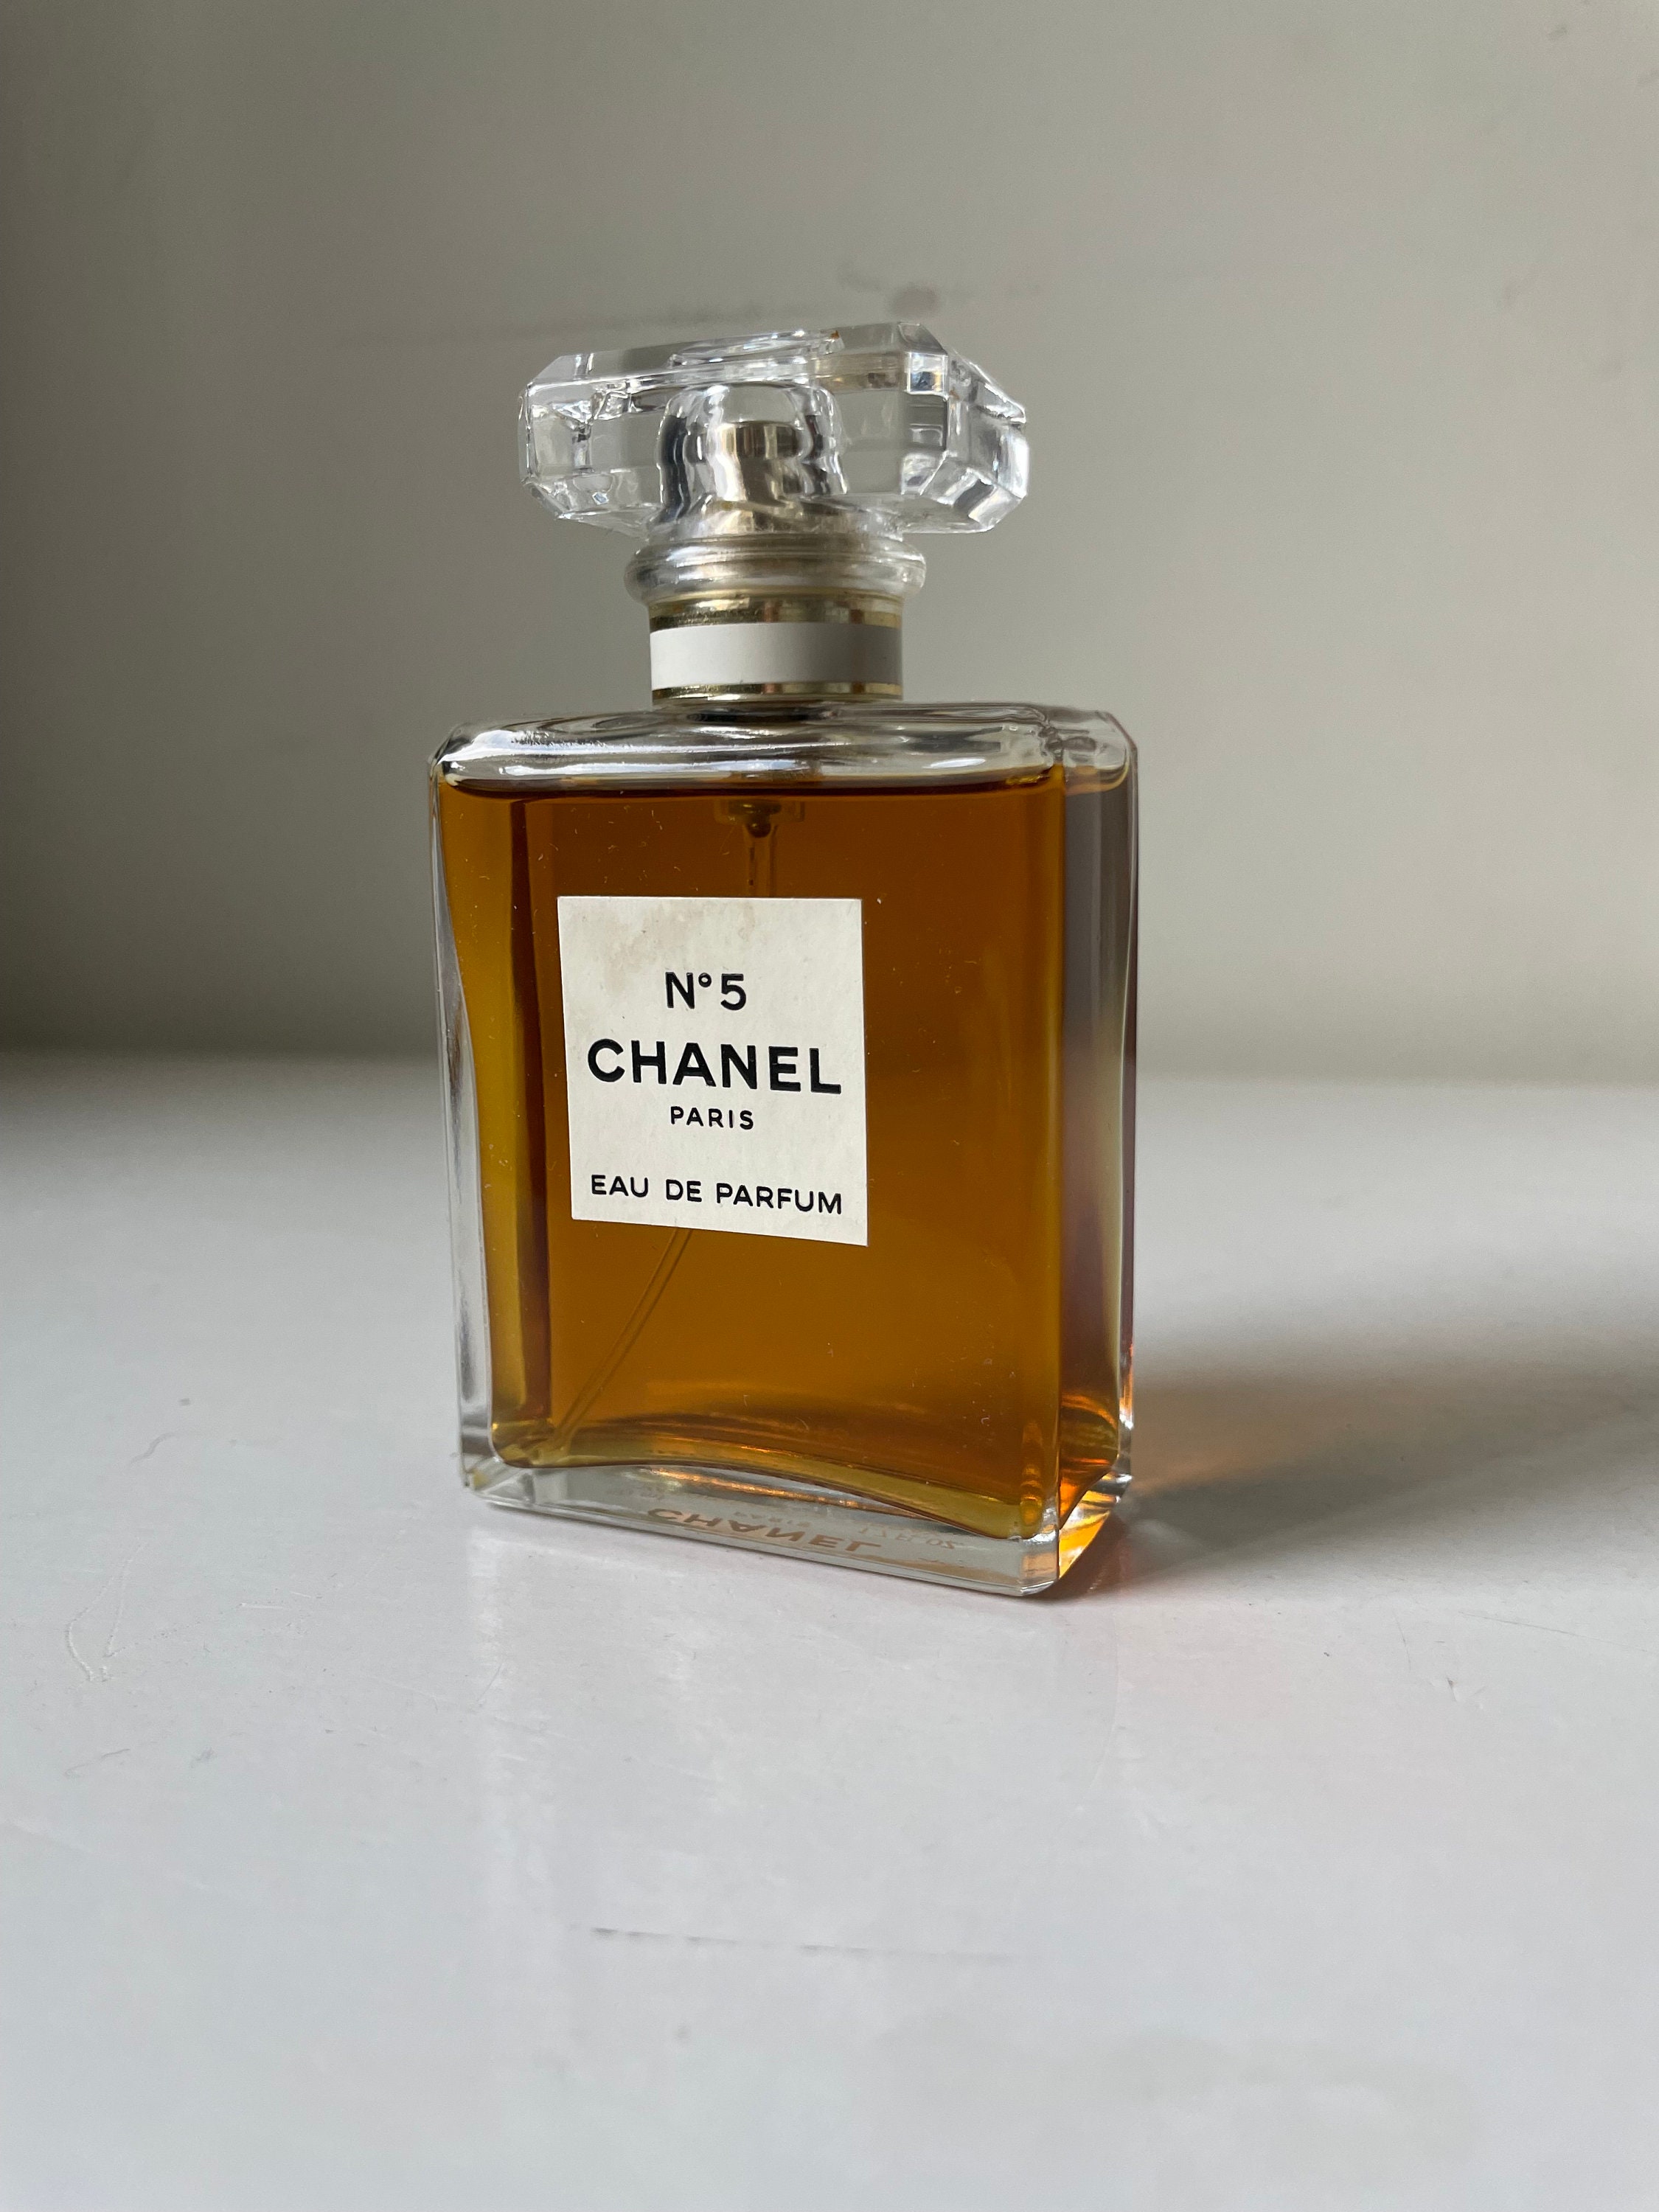 Chanel No 5 